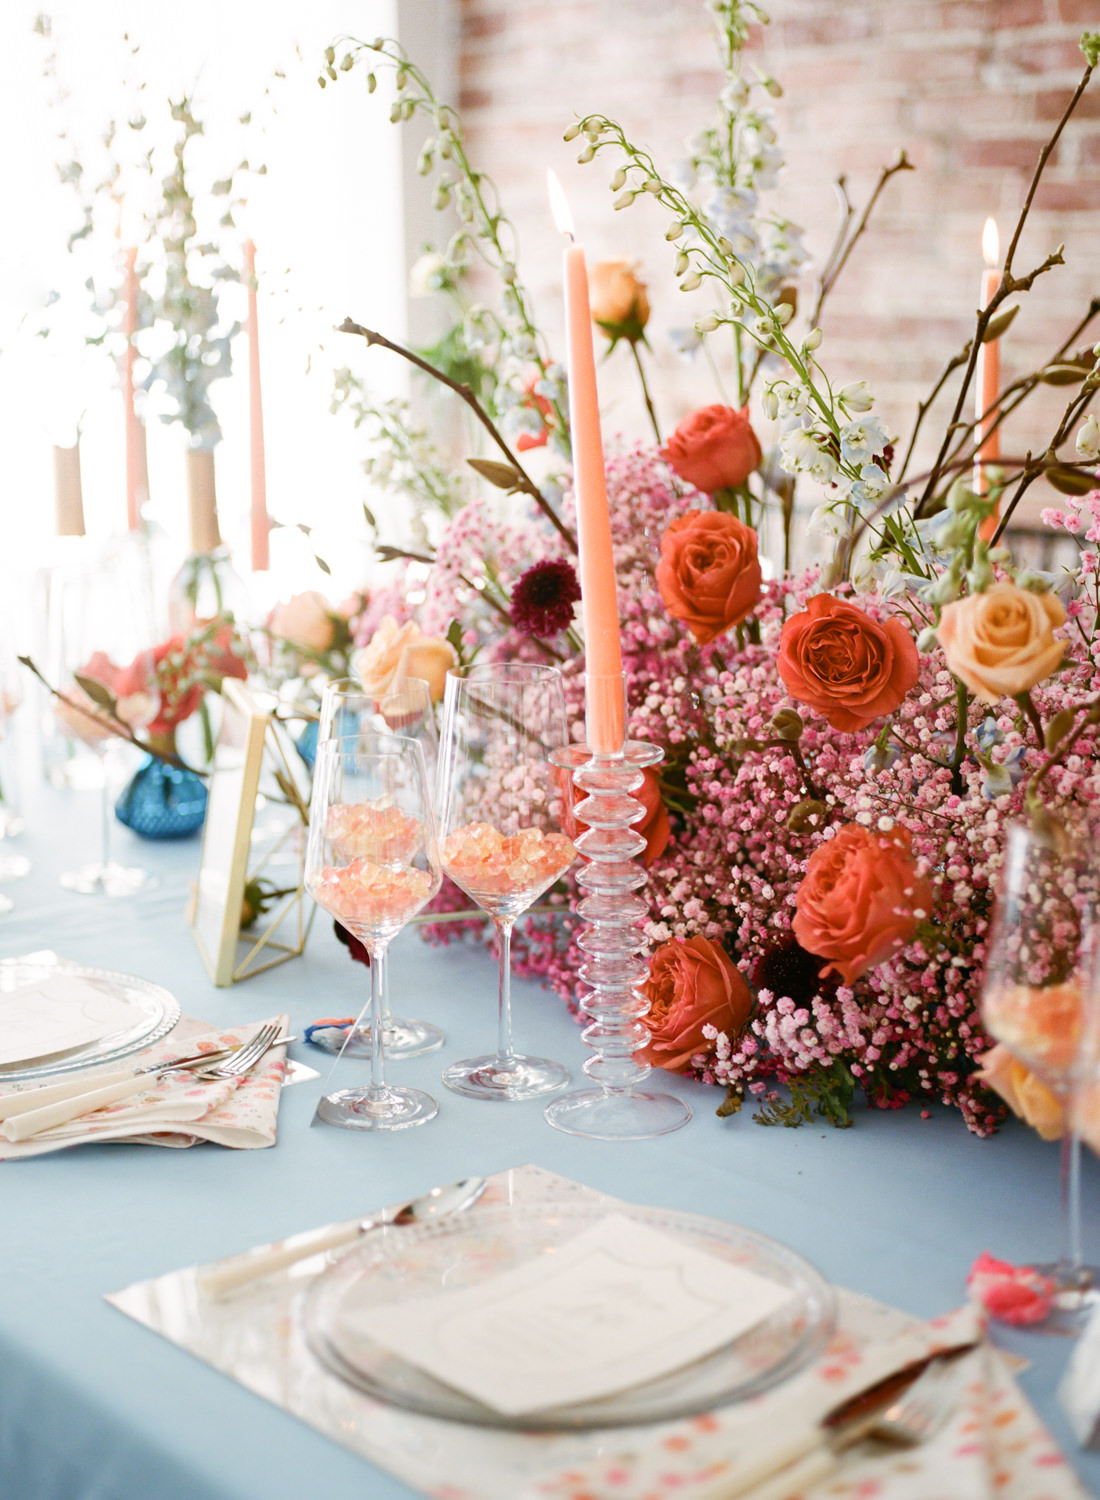 Coral floral reception decor by Lavish Floral Design, Sara Elizabeth weddings, St. Louis fine art film wedding photographer Erica Robnett Photography